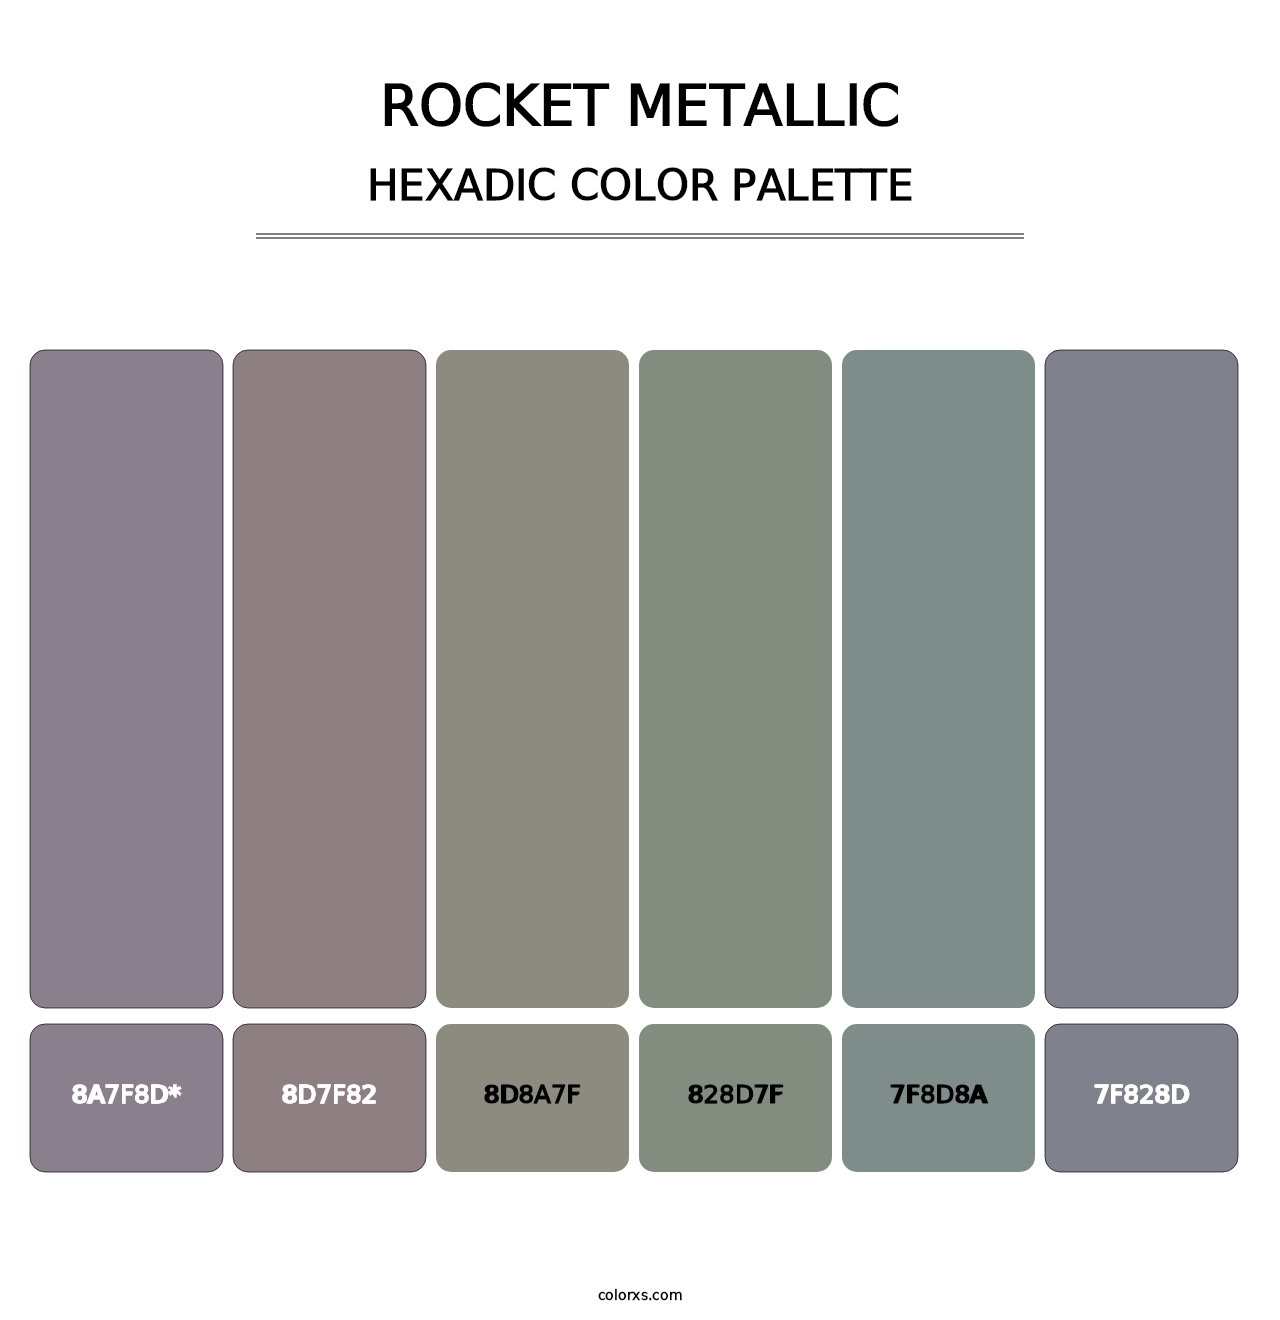 Rocket Metallic - Hexadic Color Palette